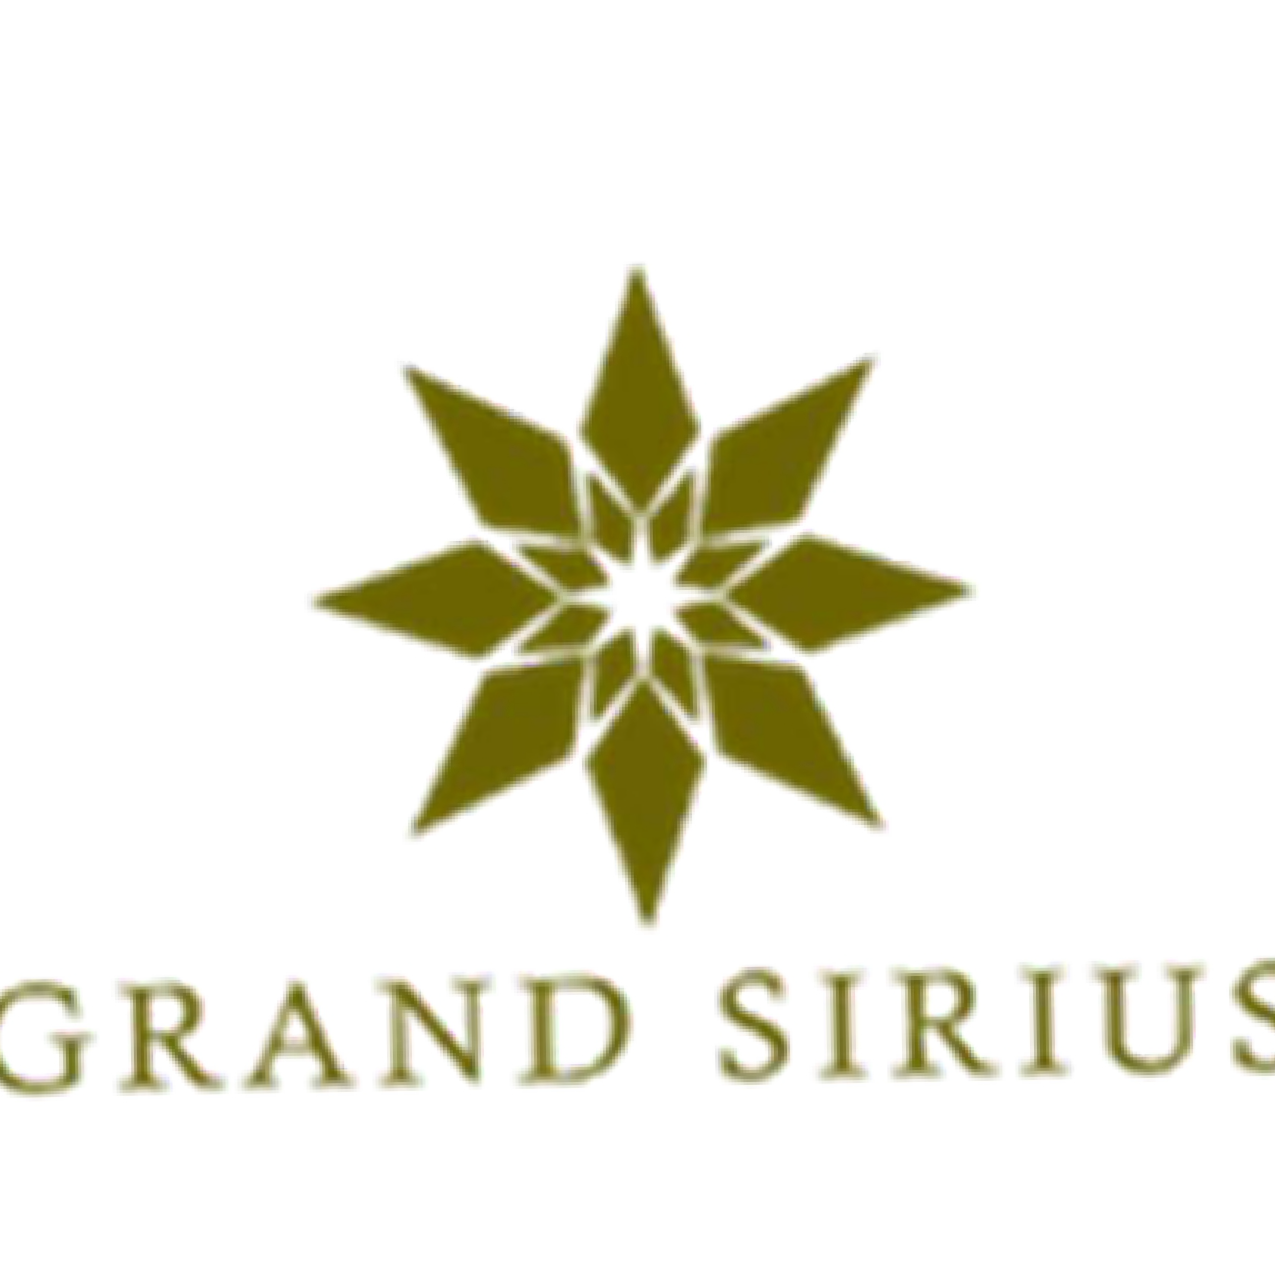 GRAND SIRIUS COMPANY LIMITED